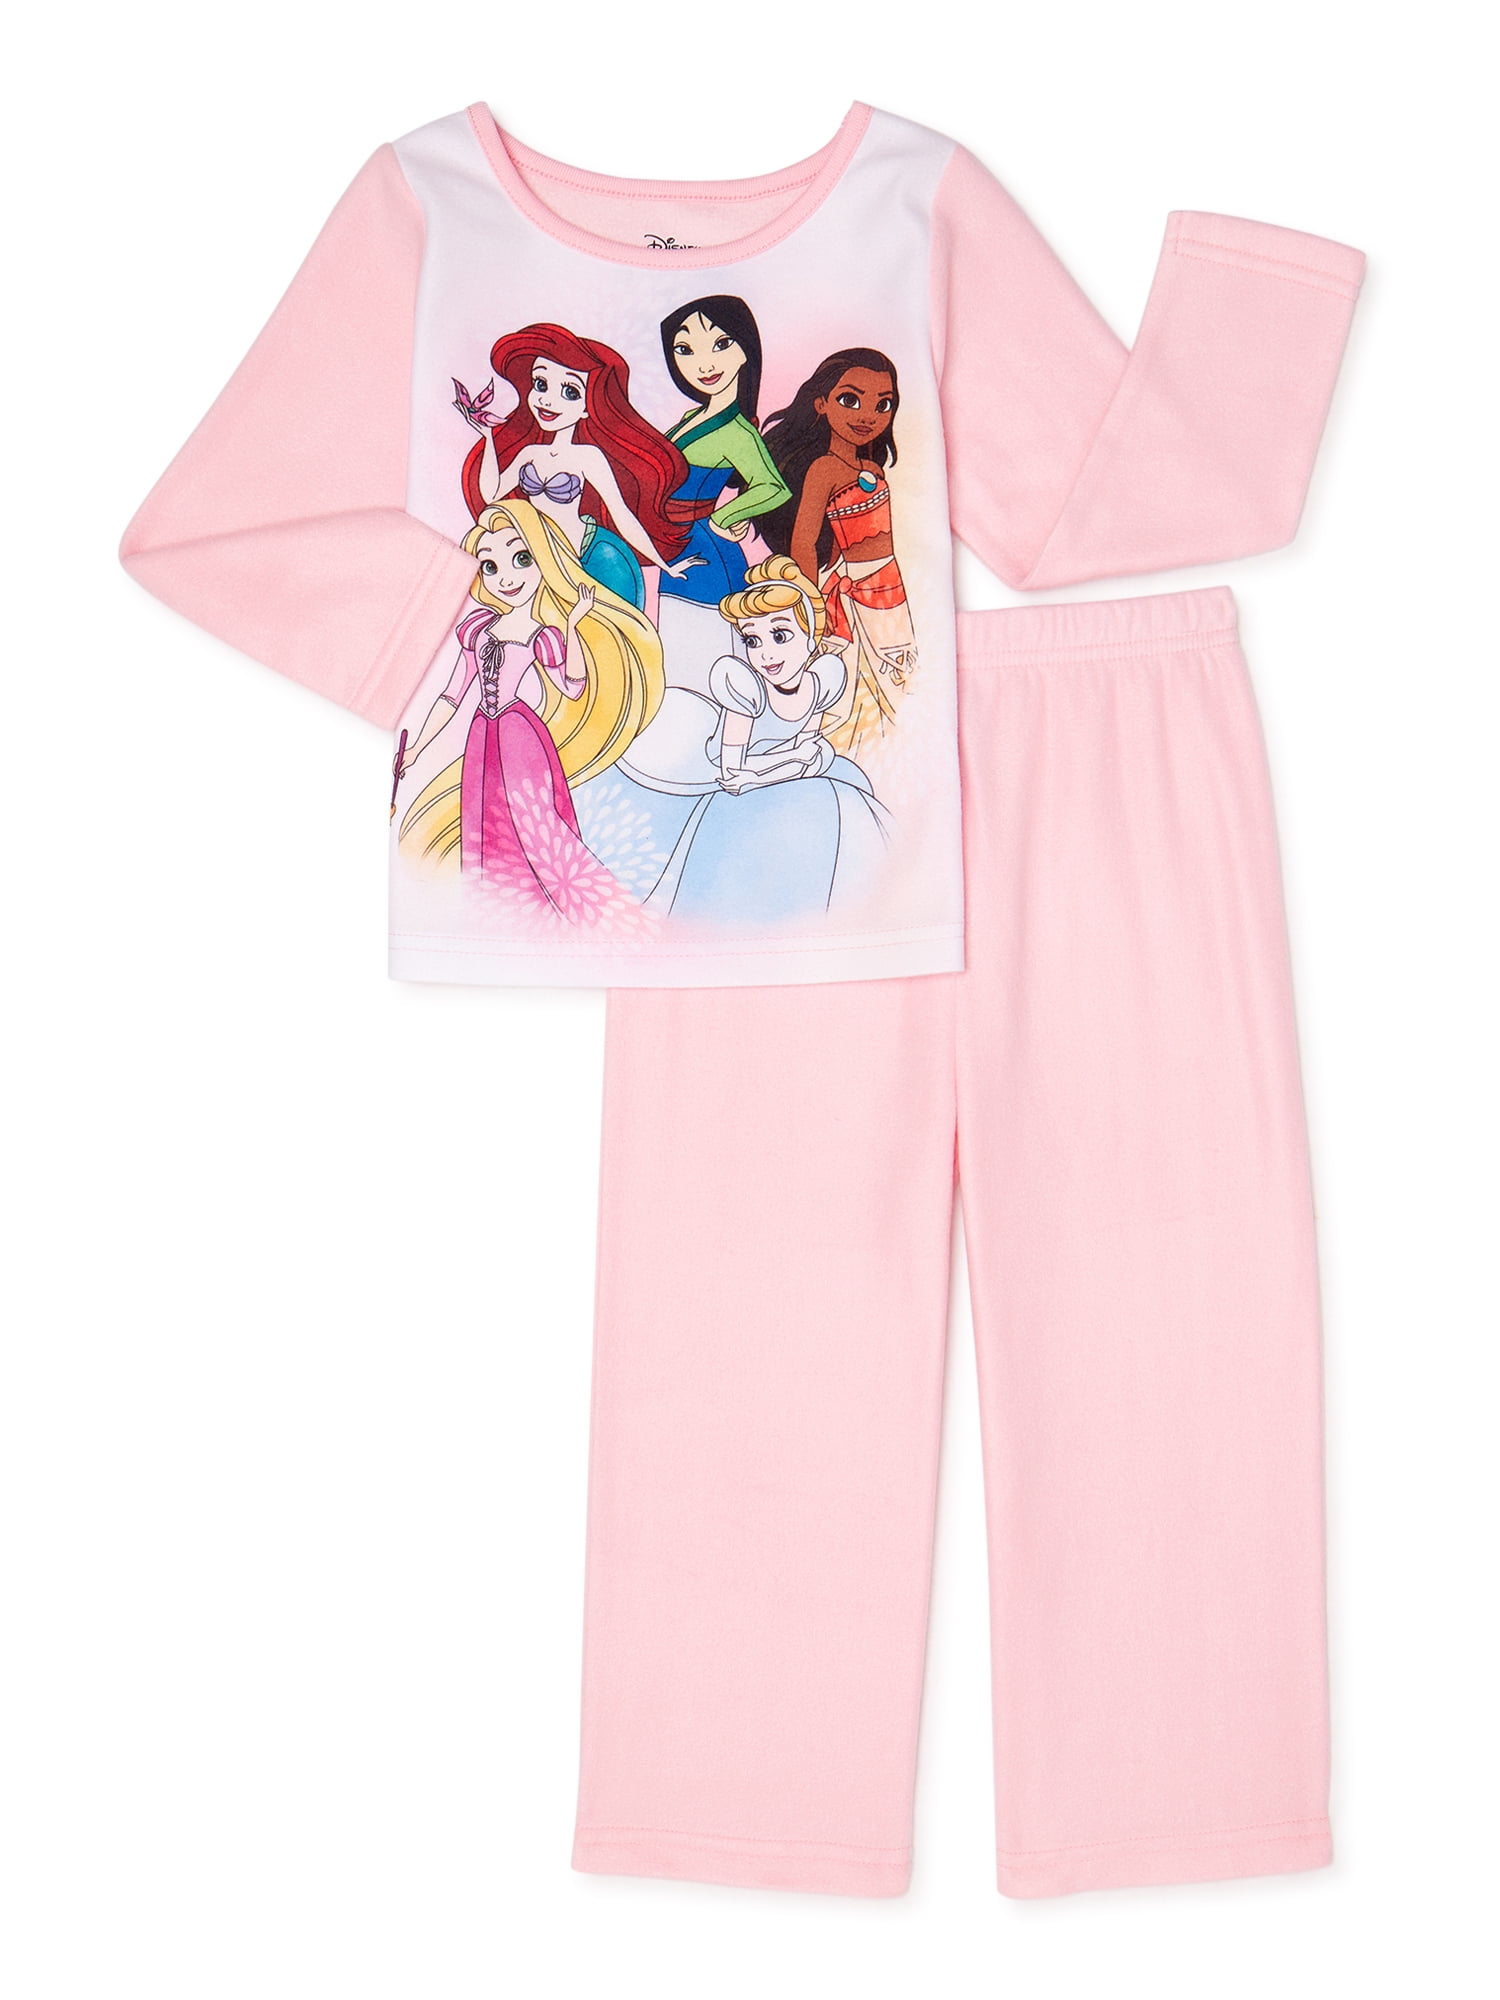 Cute PJ for Girls Disney Princess Soft & Comfortable Nightgown